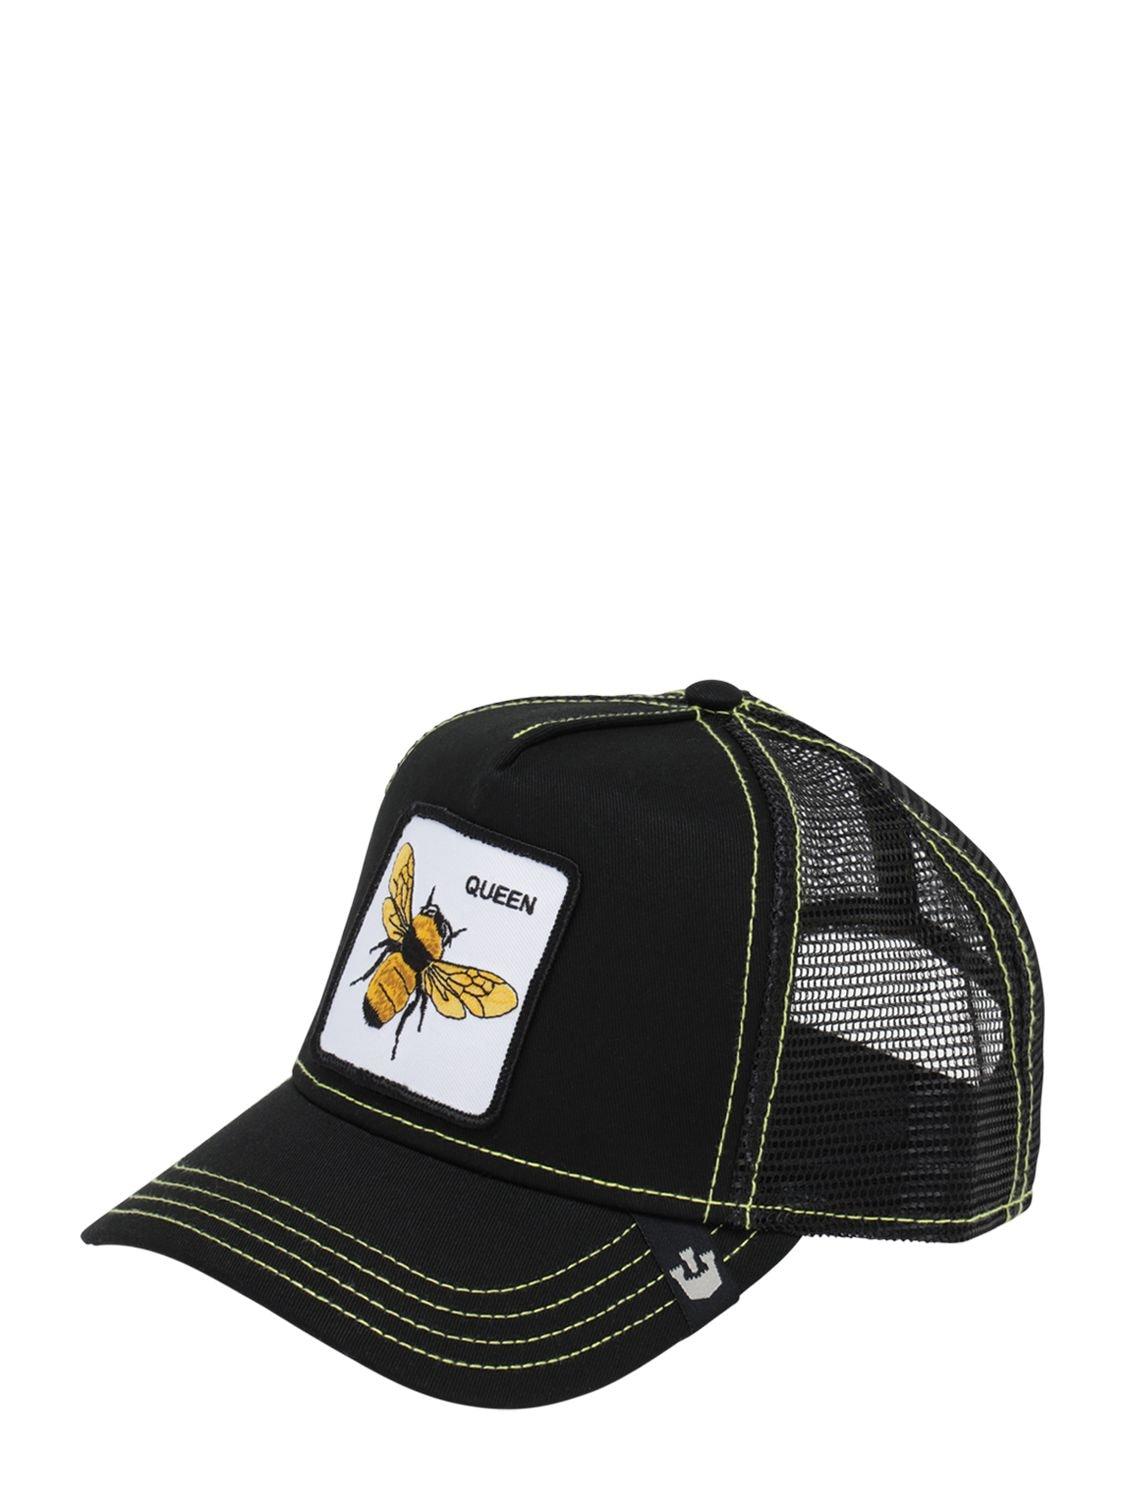 Goorin Bros Cotton Barn Collection Animal Farm Trucker Hat in Black for Men  - Save 67% - Lyst